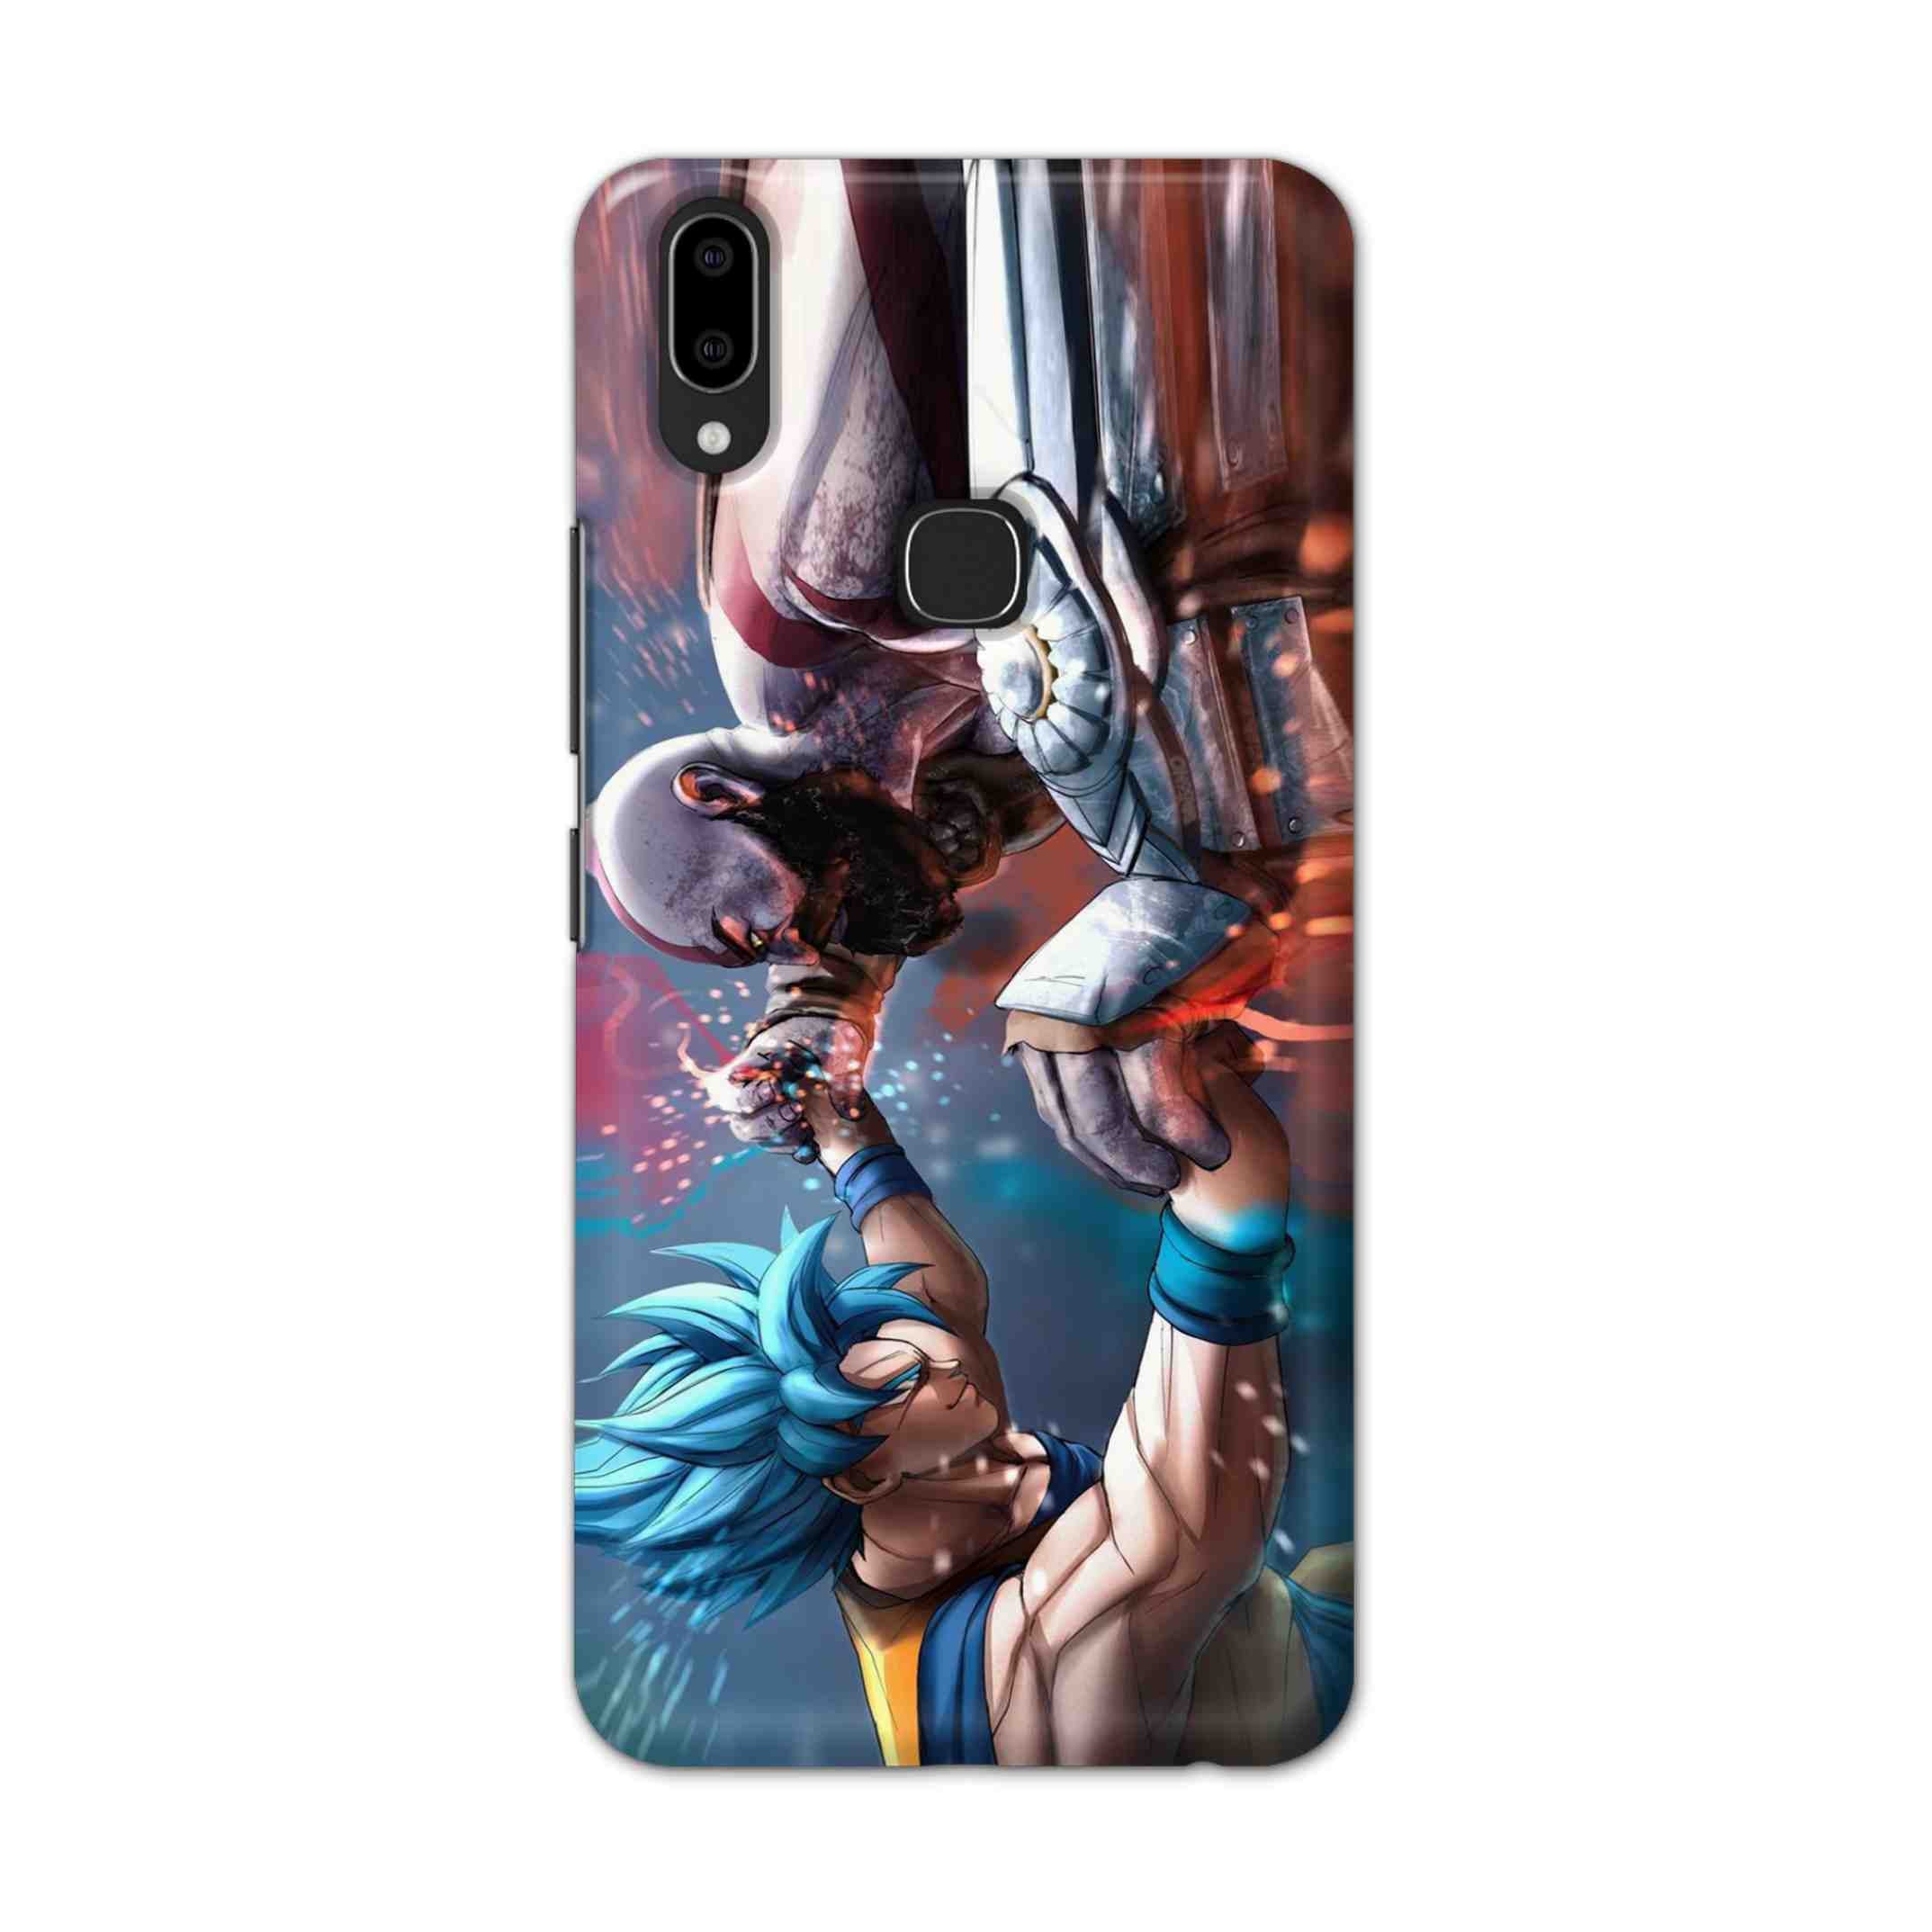 Buy Goku Vs Kratos Hard Back Mobile Phone Case Cover For Vivo V9 / V9 Youth Online